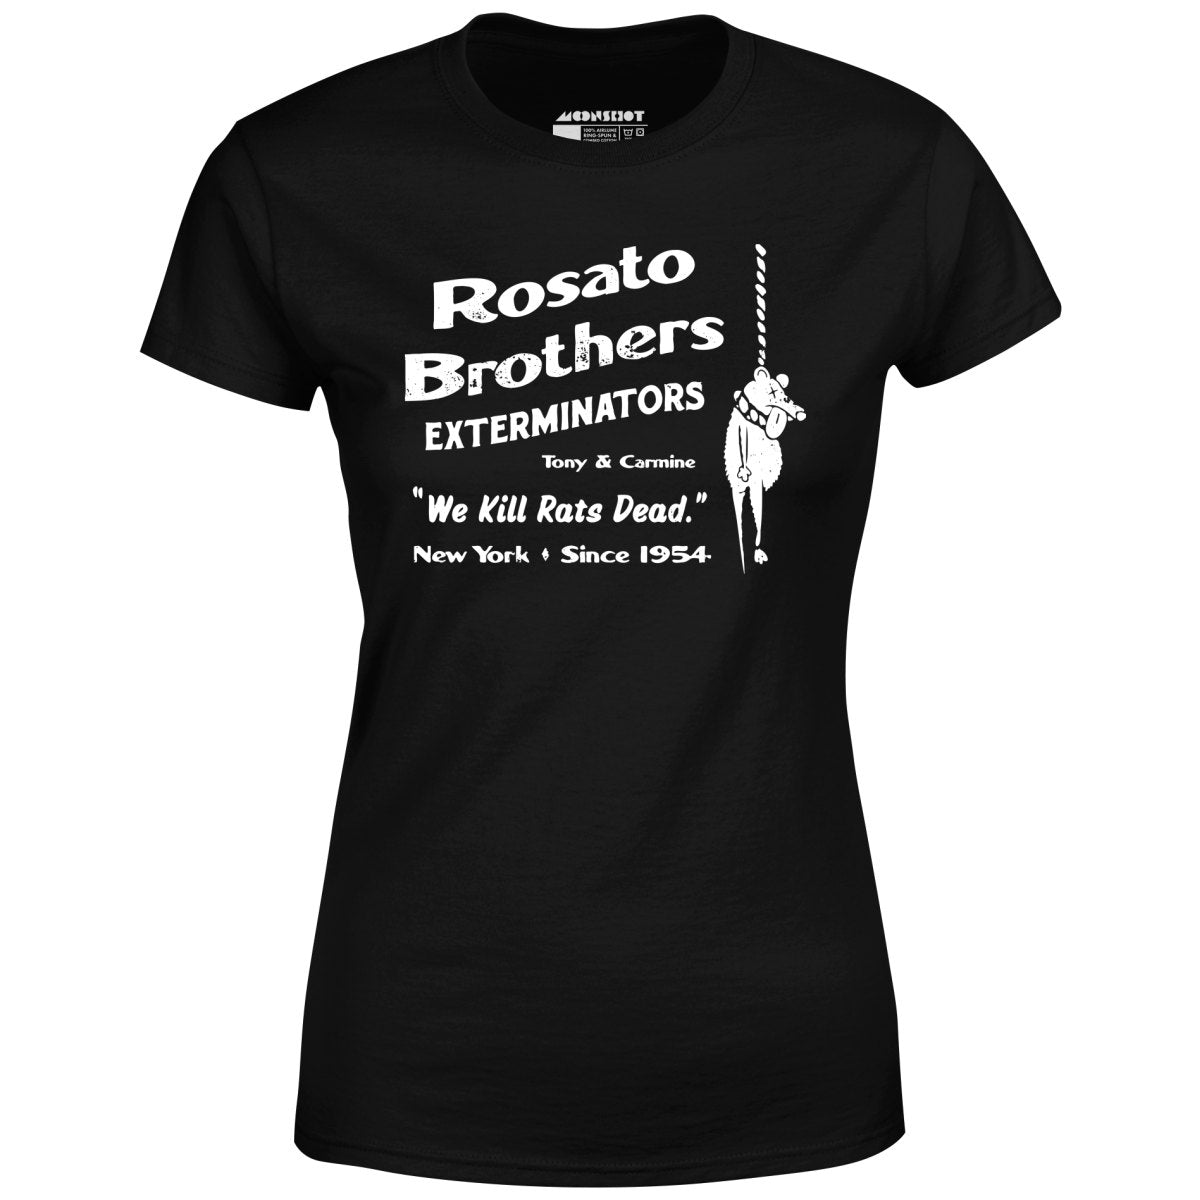 Rosato Brothers Exterminators - Women's T-Shirt